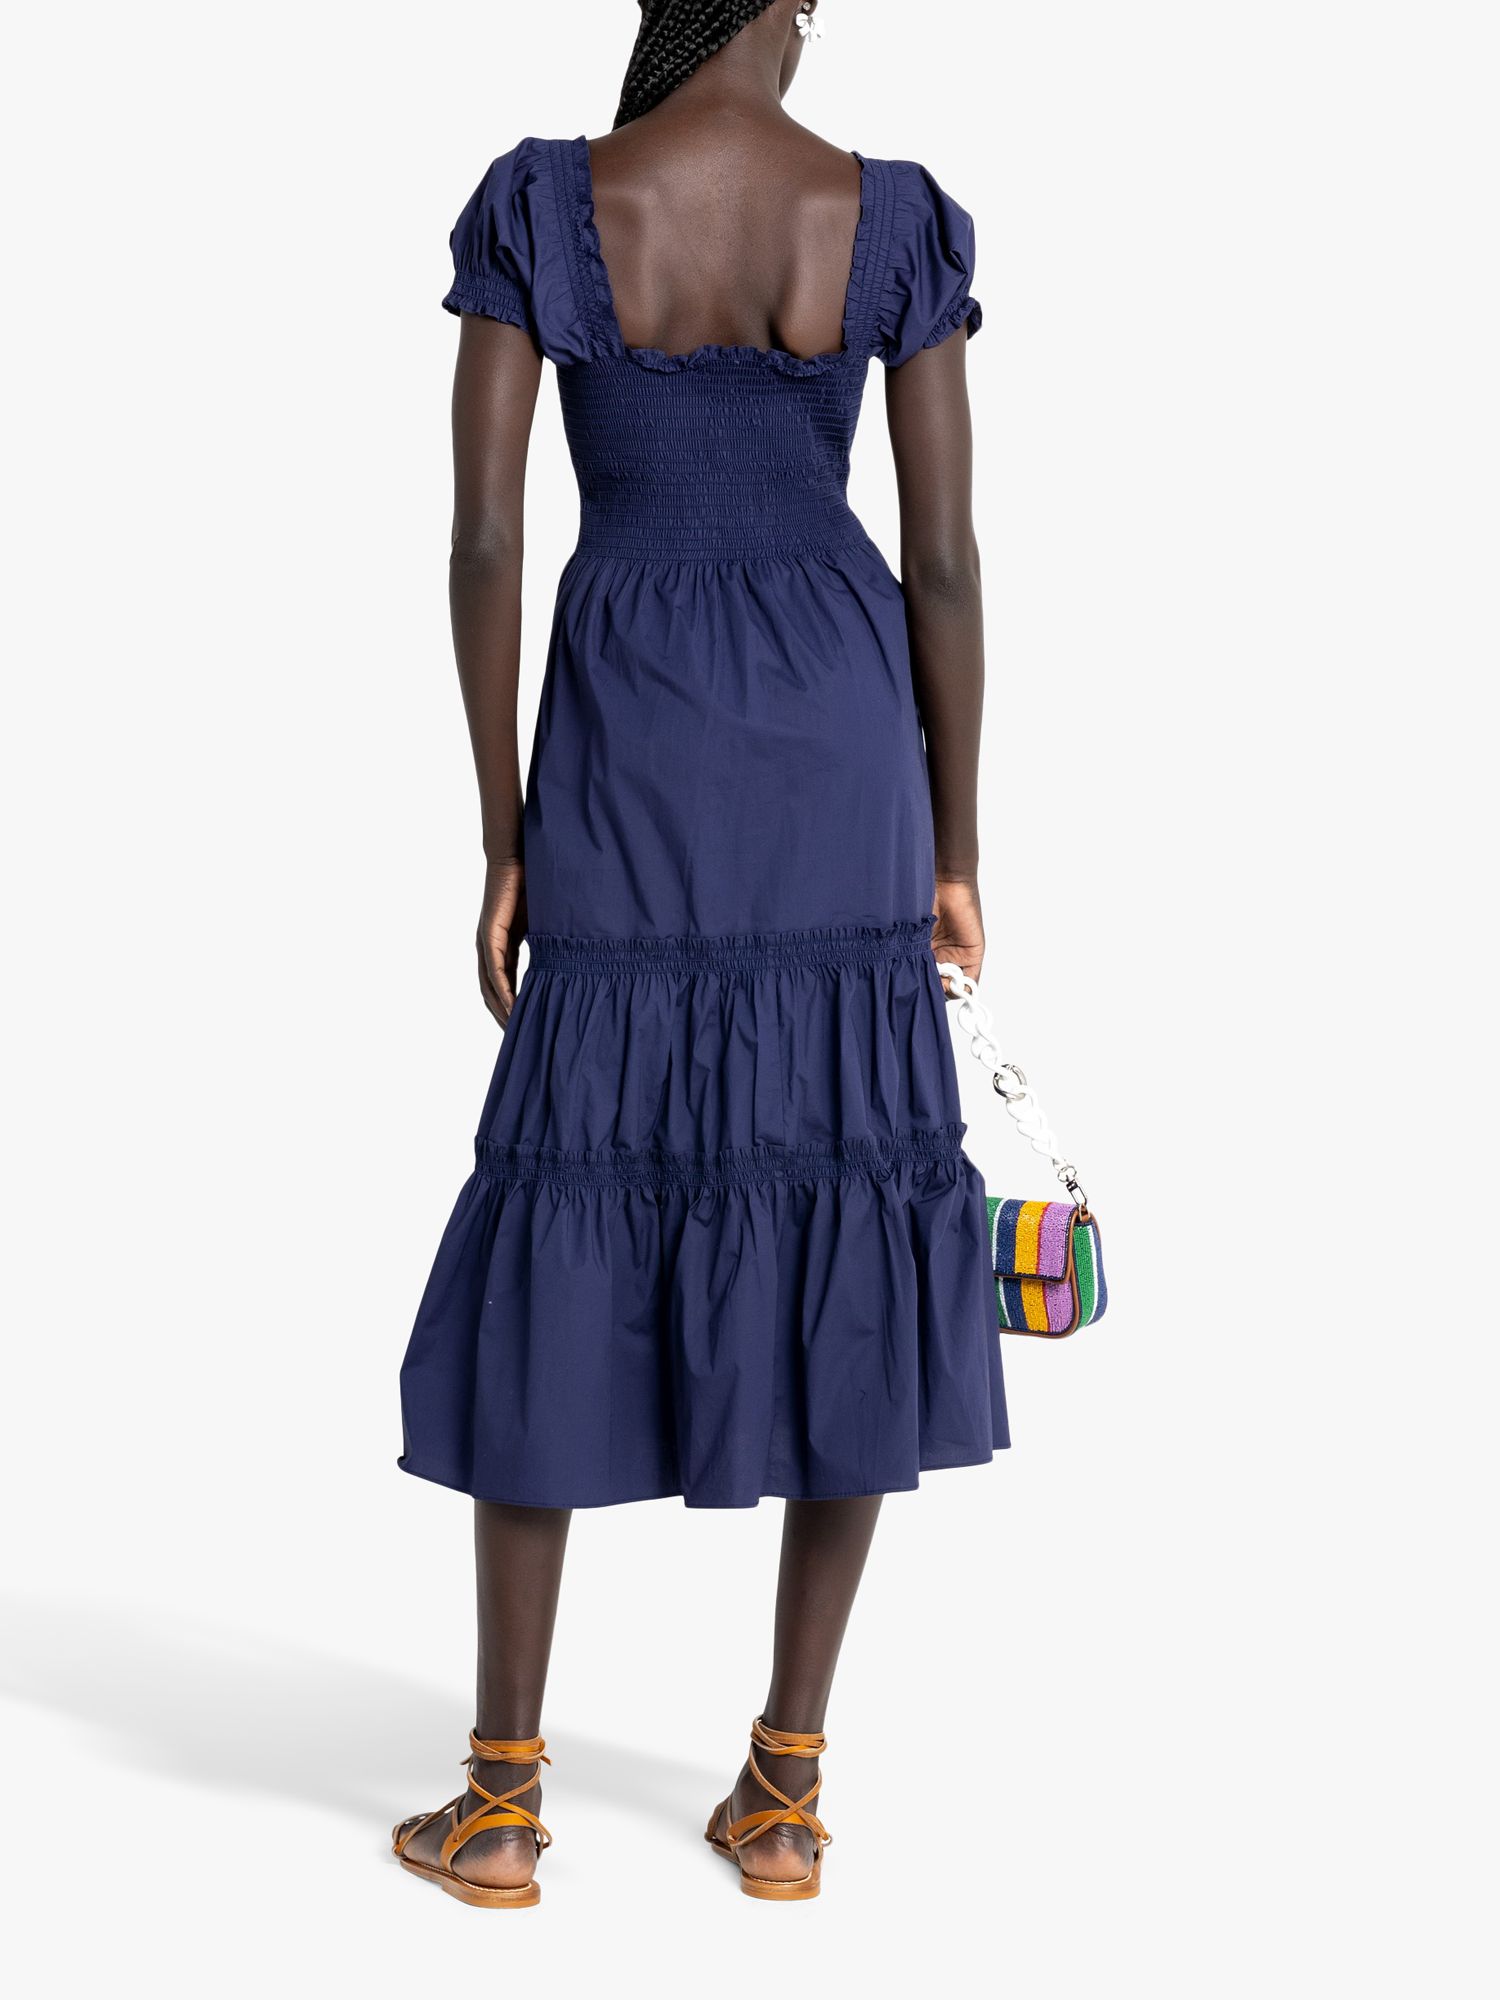 o.p.t Daphne Tiered Midi Dress, Navy at John Lewis & Partners